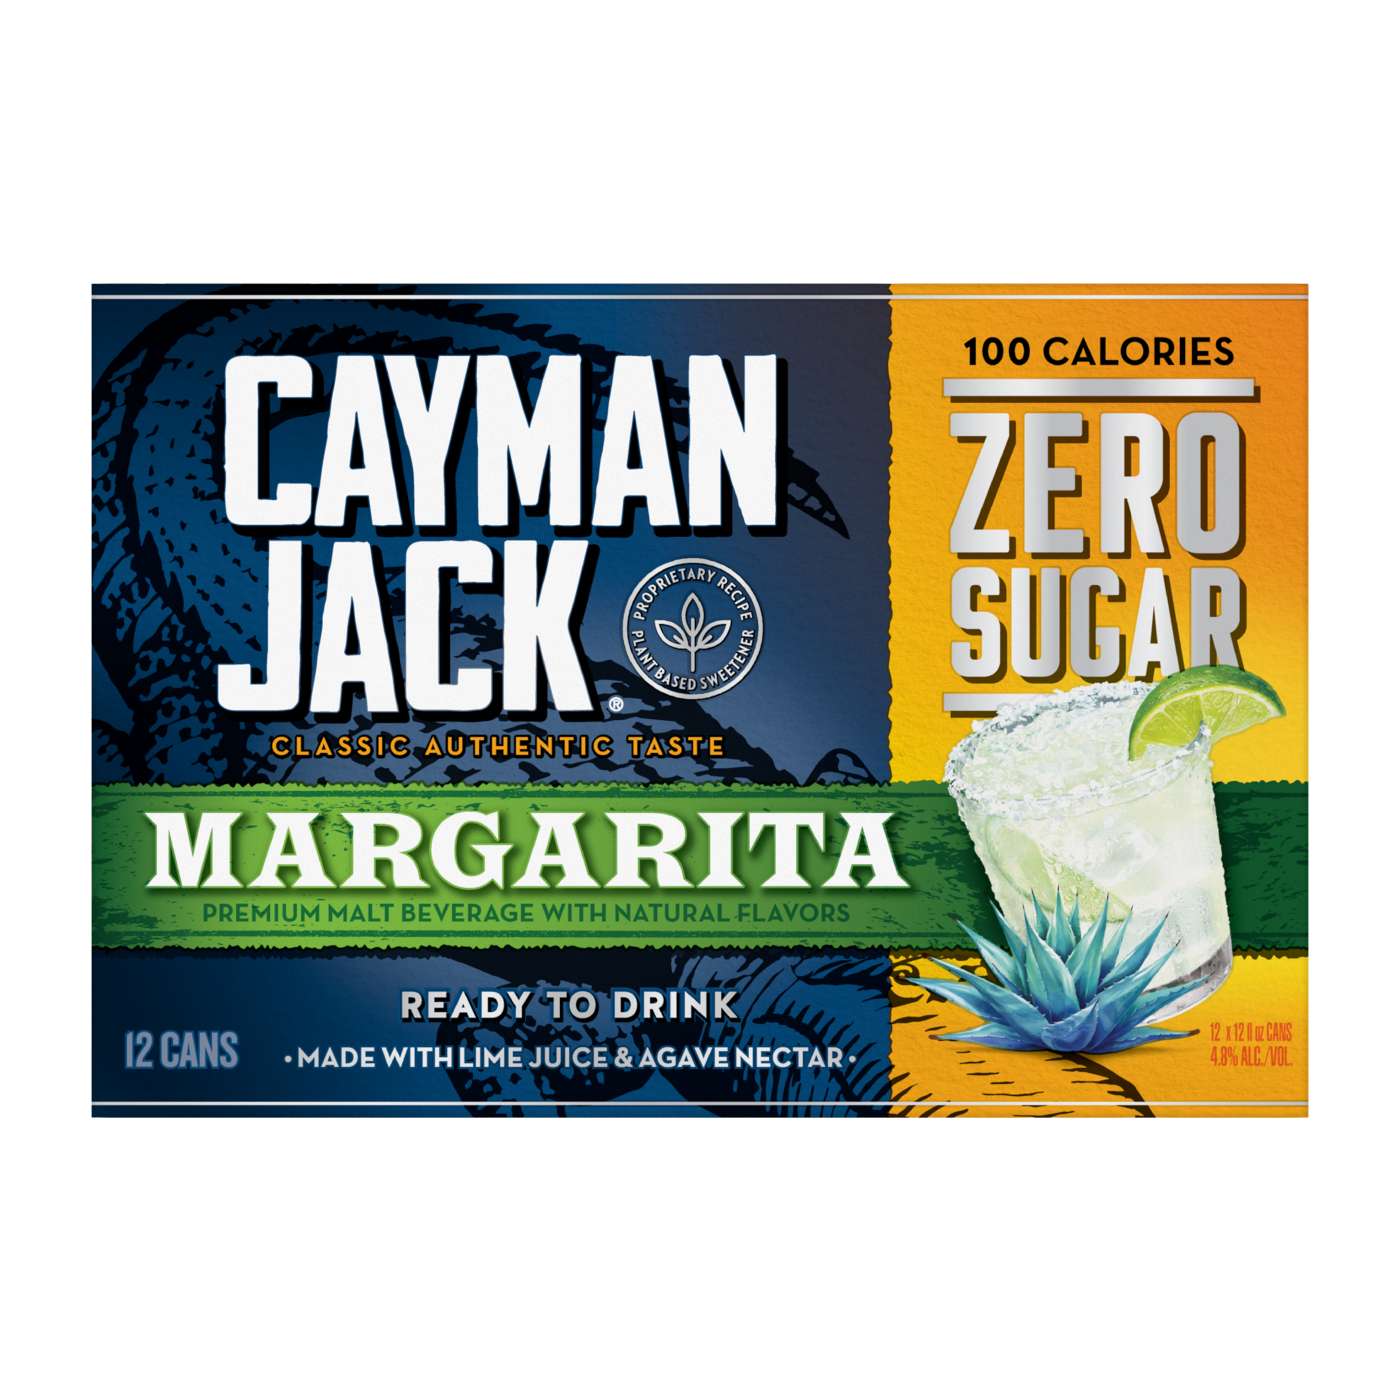 Cayman Jack Zero Sugar Margarita Cans 12 pk; image 1 of 2